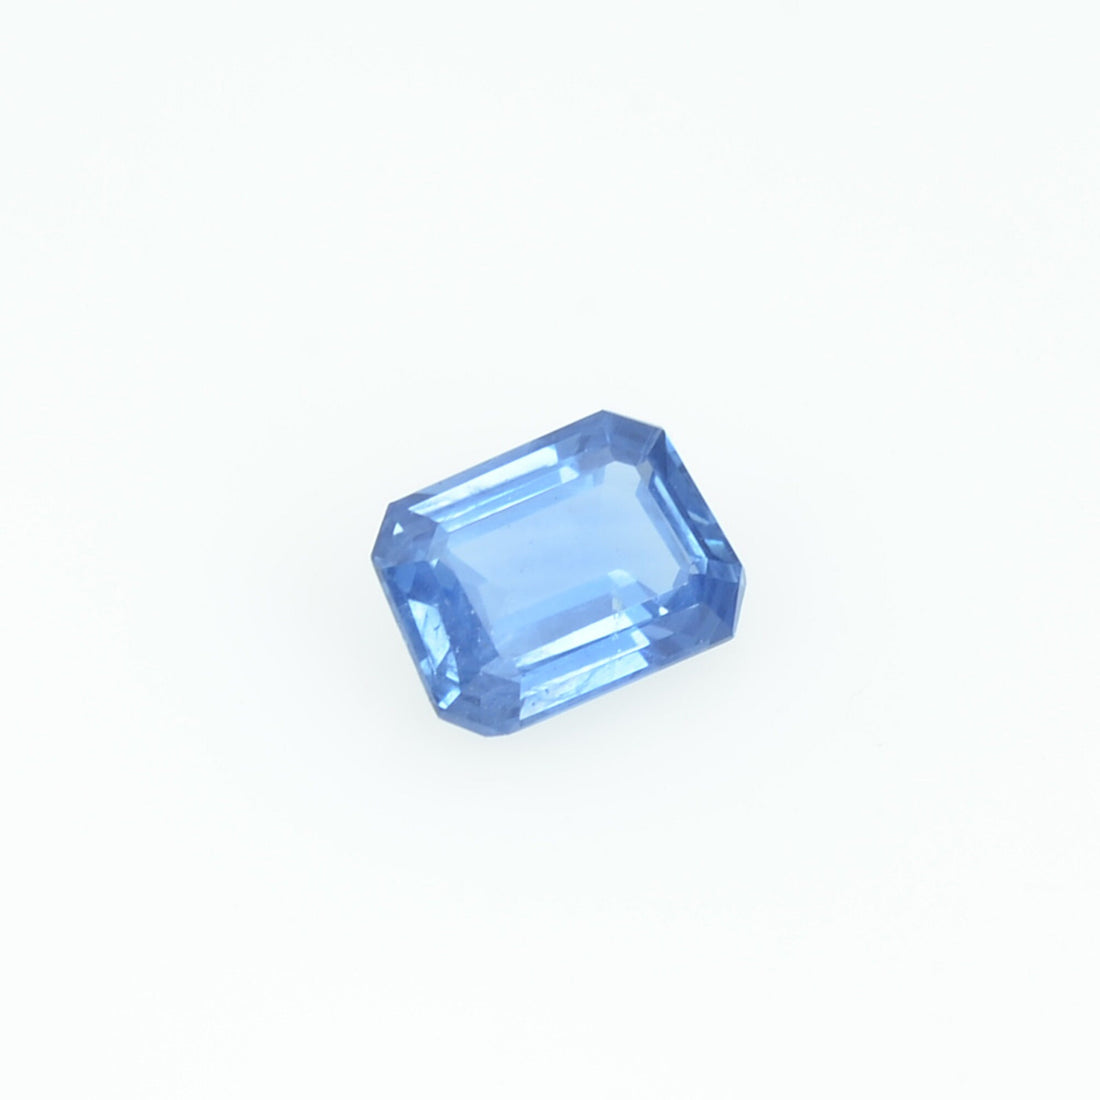 0.41 cts Natural Blue Sapphire Loose Gemstone Emerald Cut